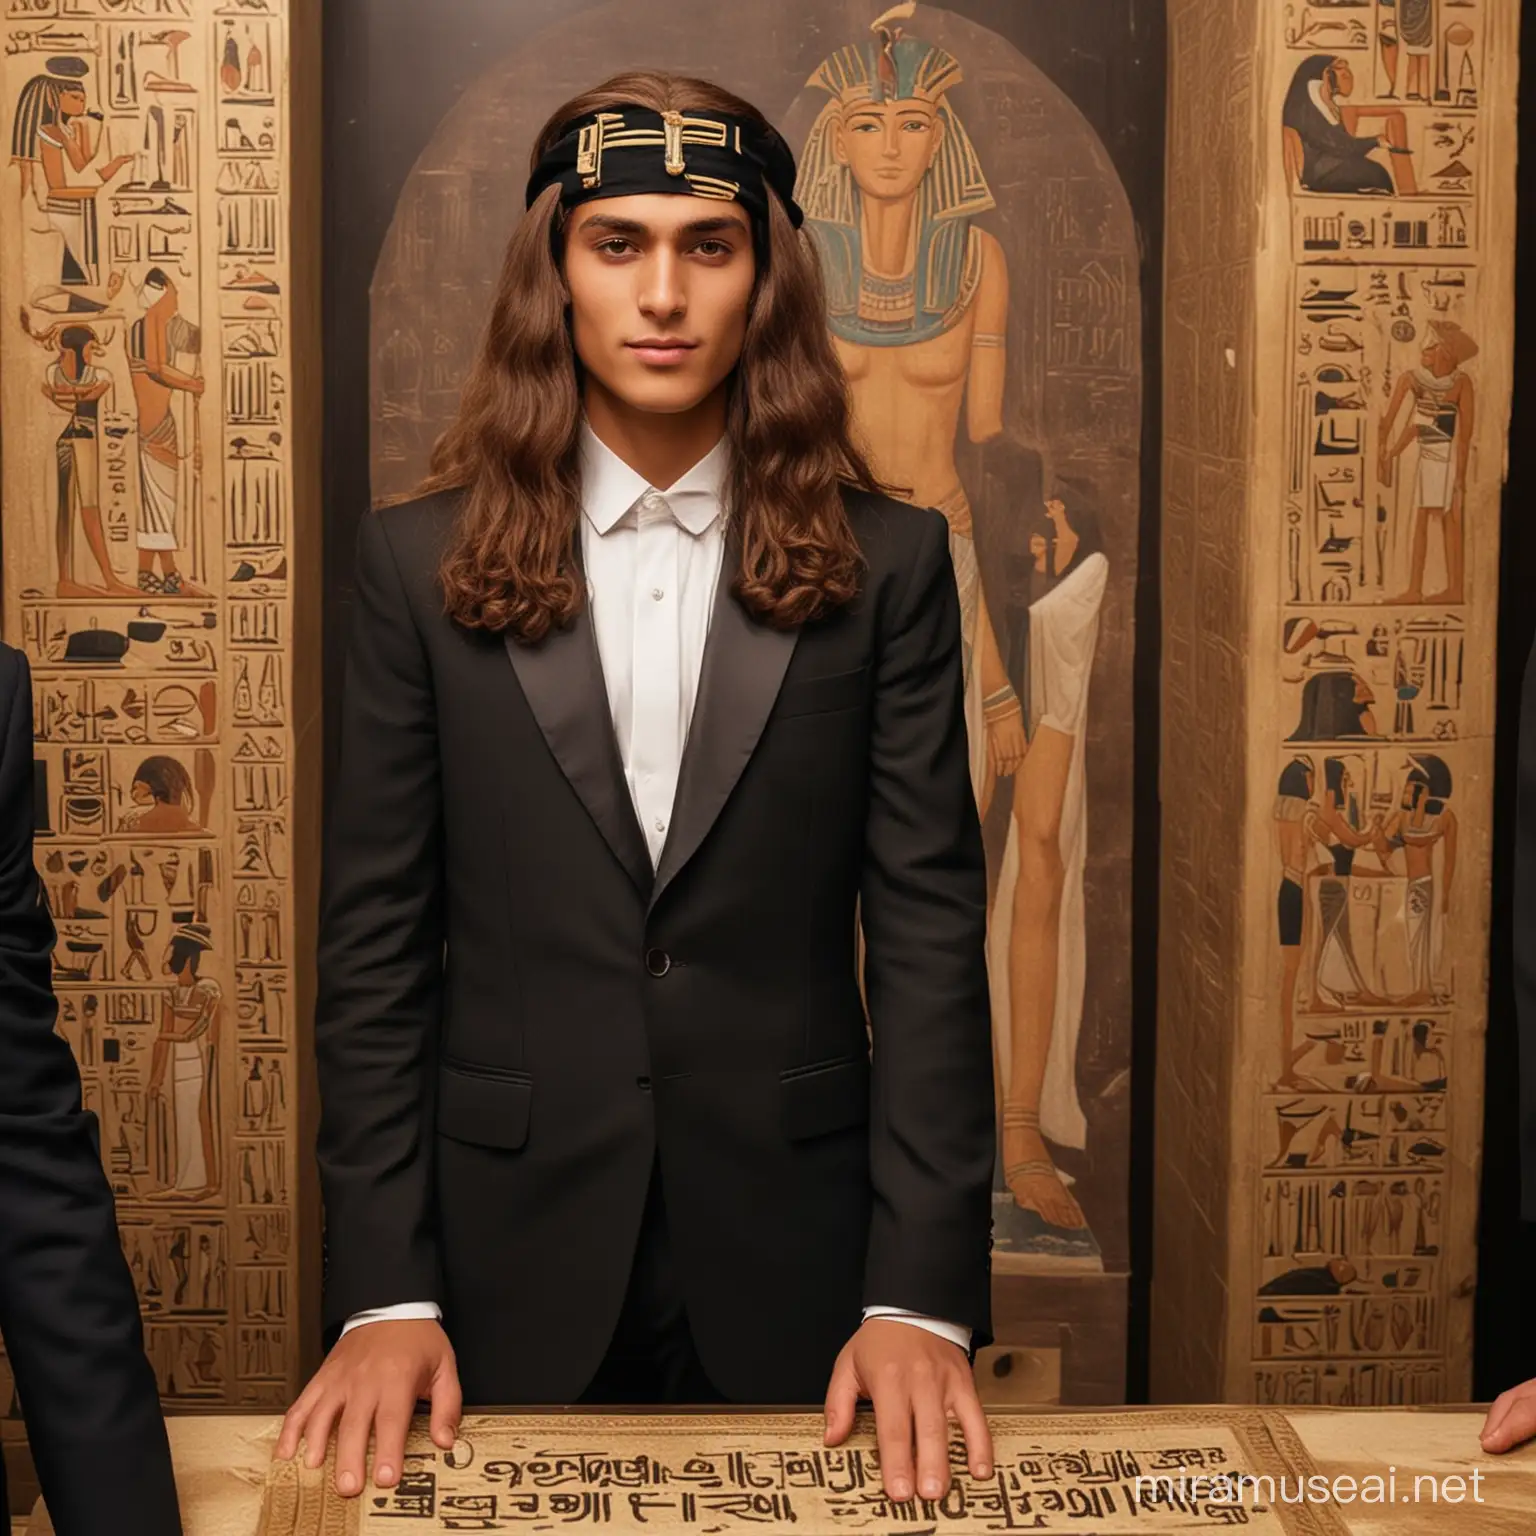 Son of Pharaoh Akhanaton with Long Hair at Formal Egyptian Party